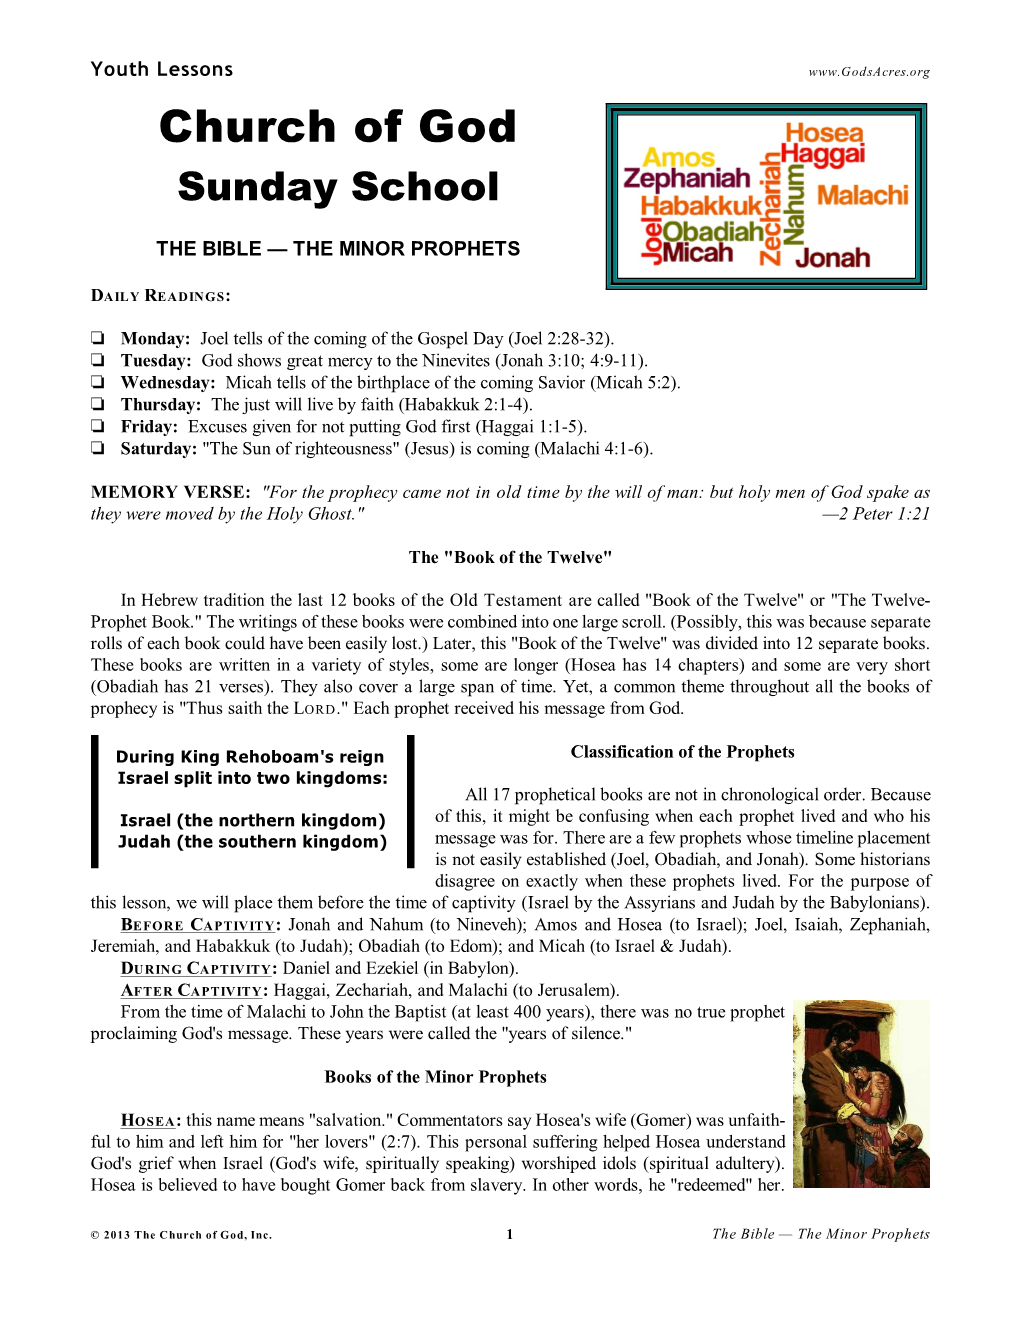 Church of God Sunday School